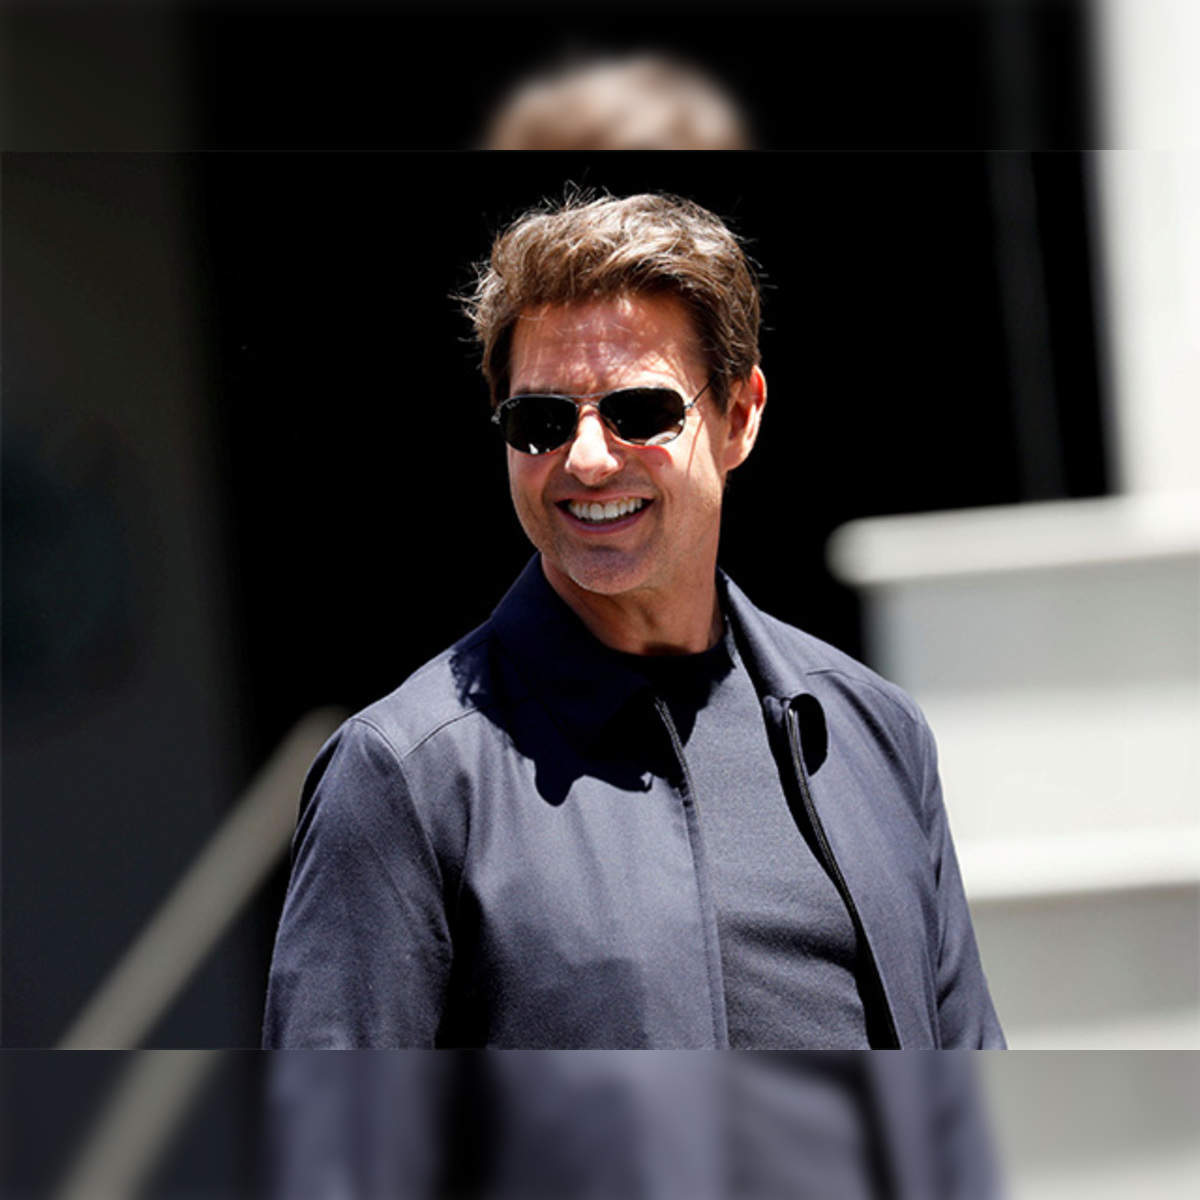 Top Gun 2': Tom Cruise confirms sequel will start filming